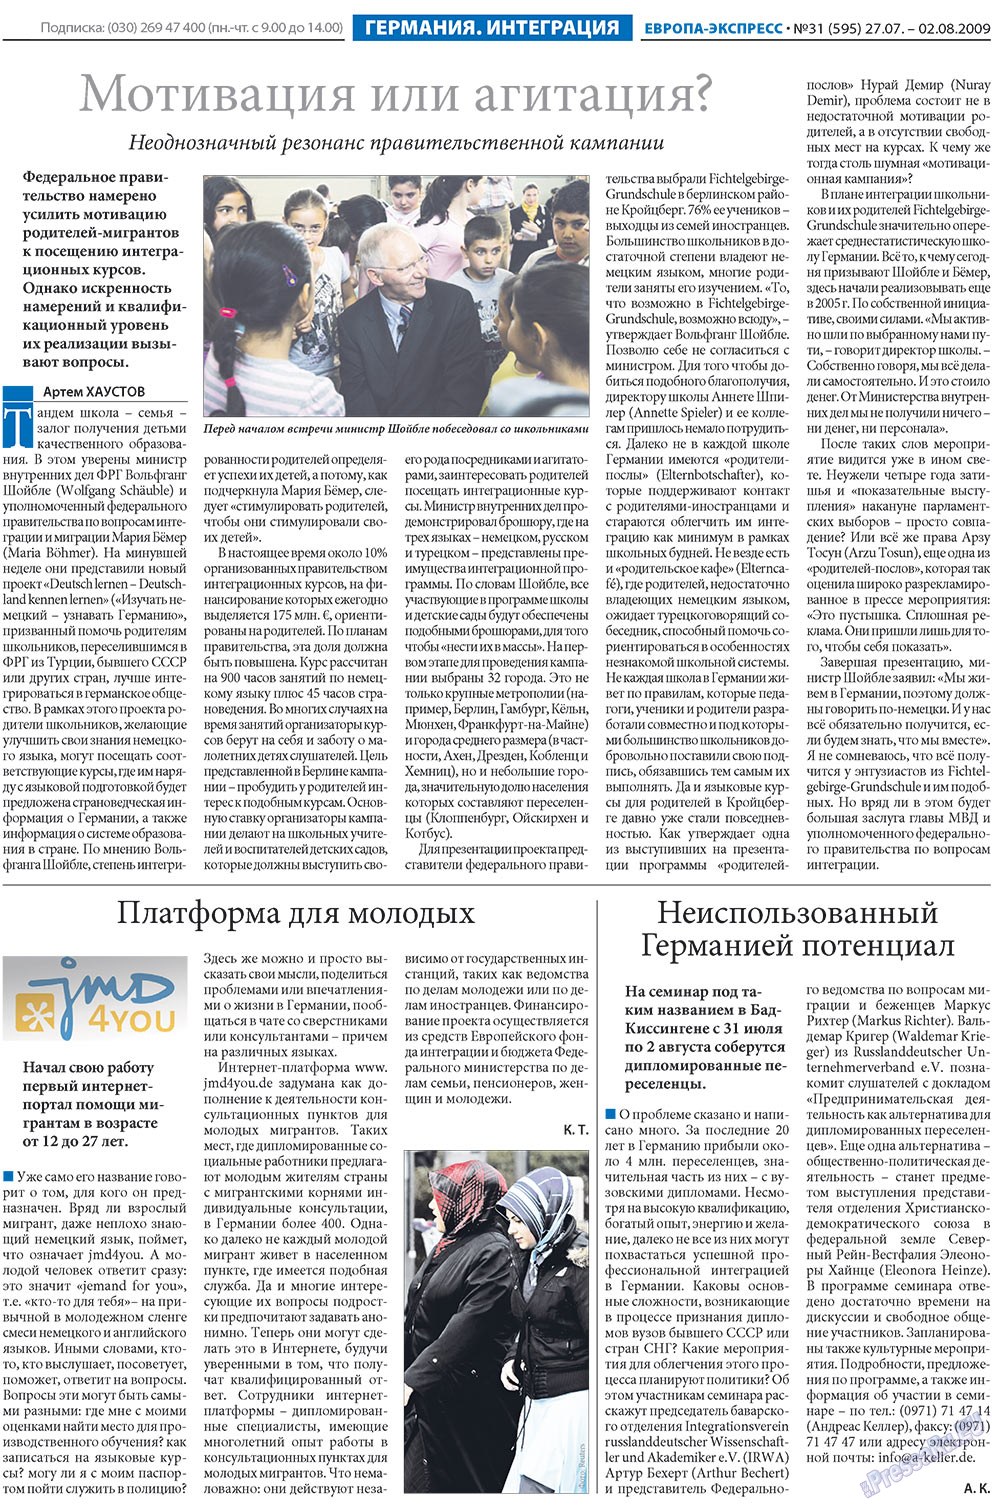 Европа экспресс, газета. 2009 №31 стр.4